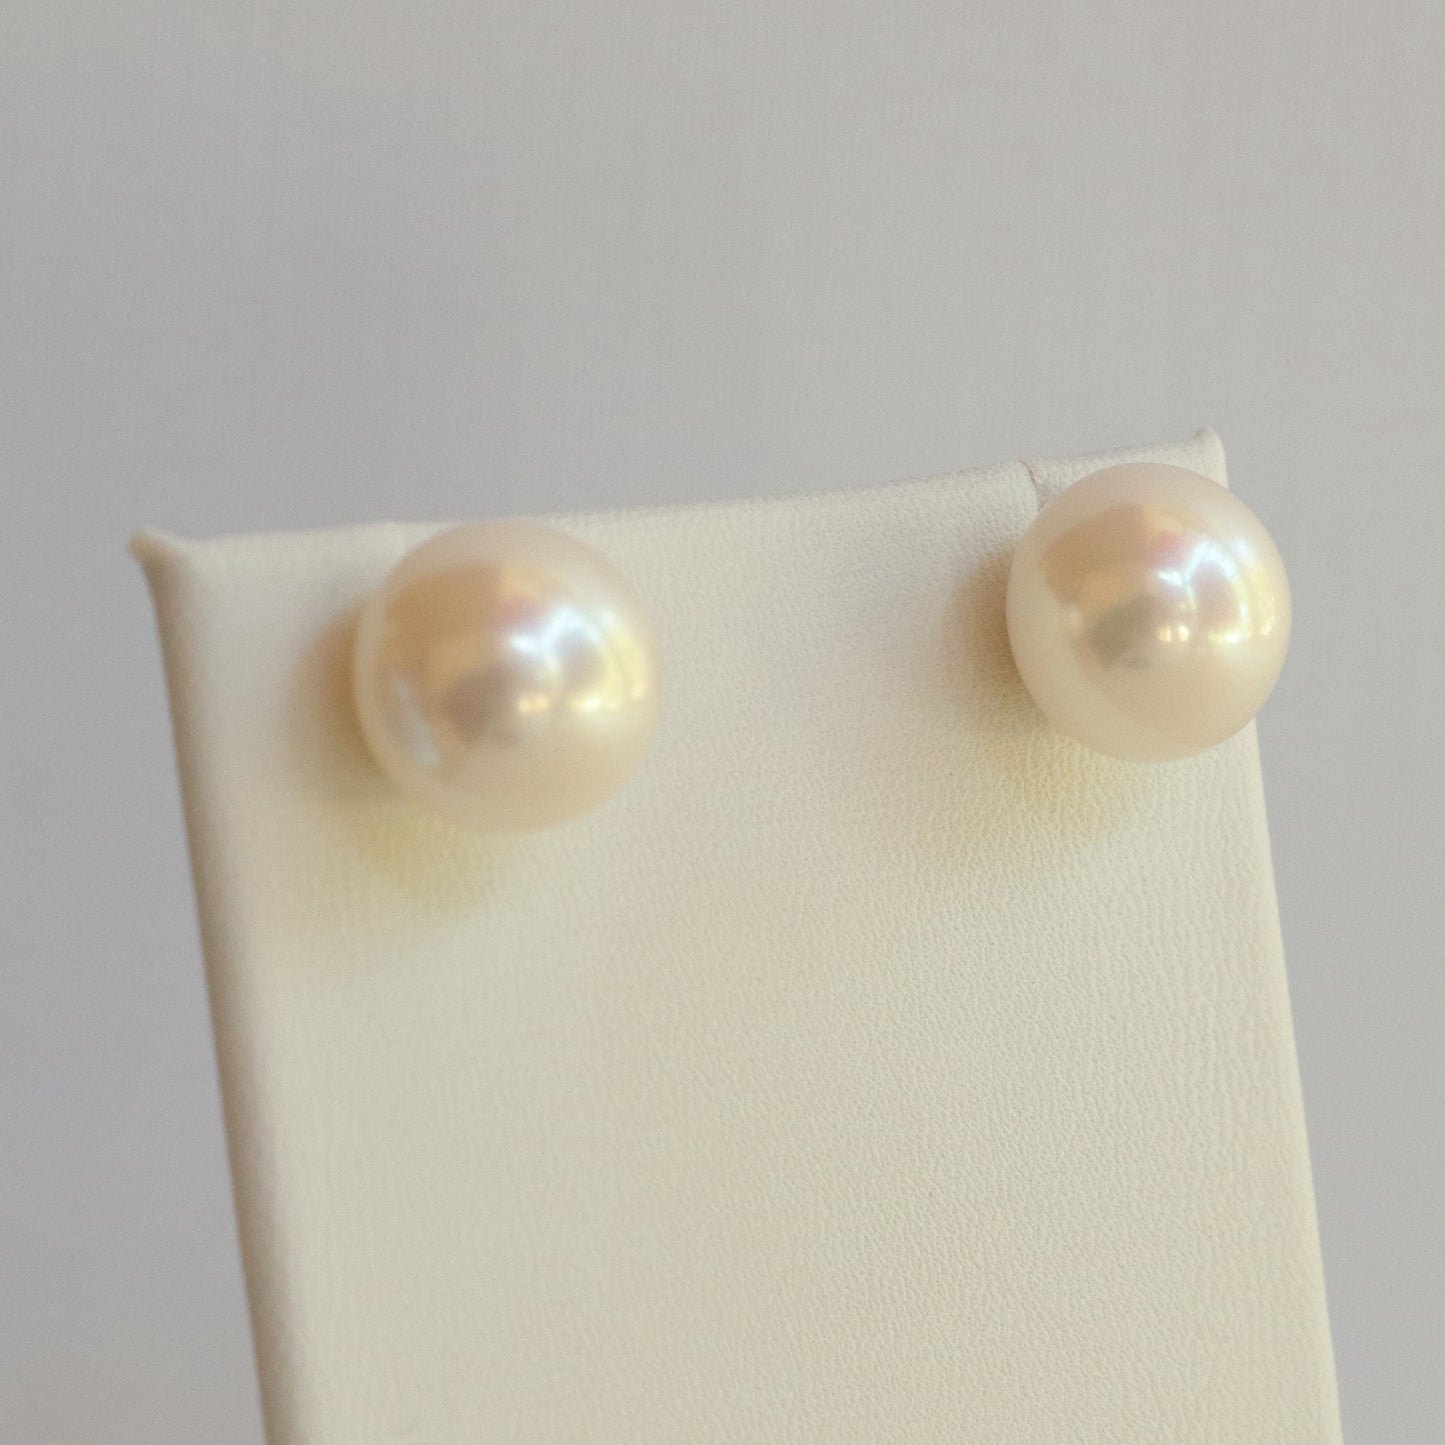 Large Freshwater Pearl Stud Earrings - silver/white